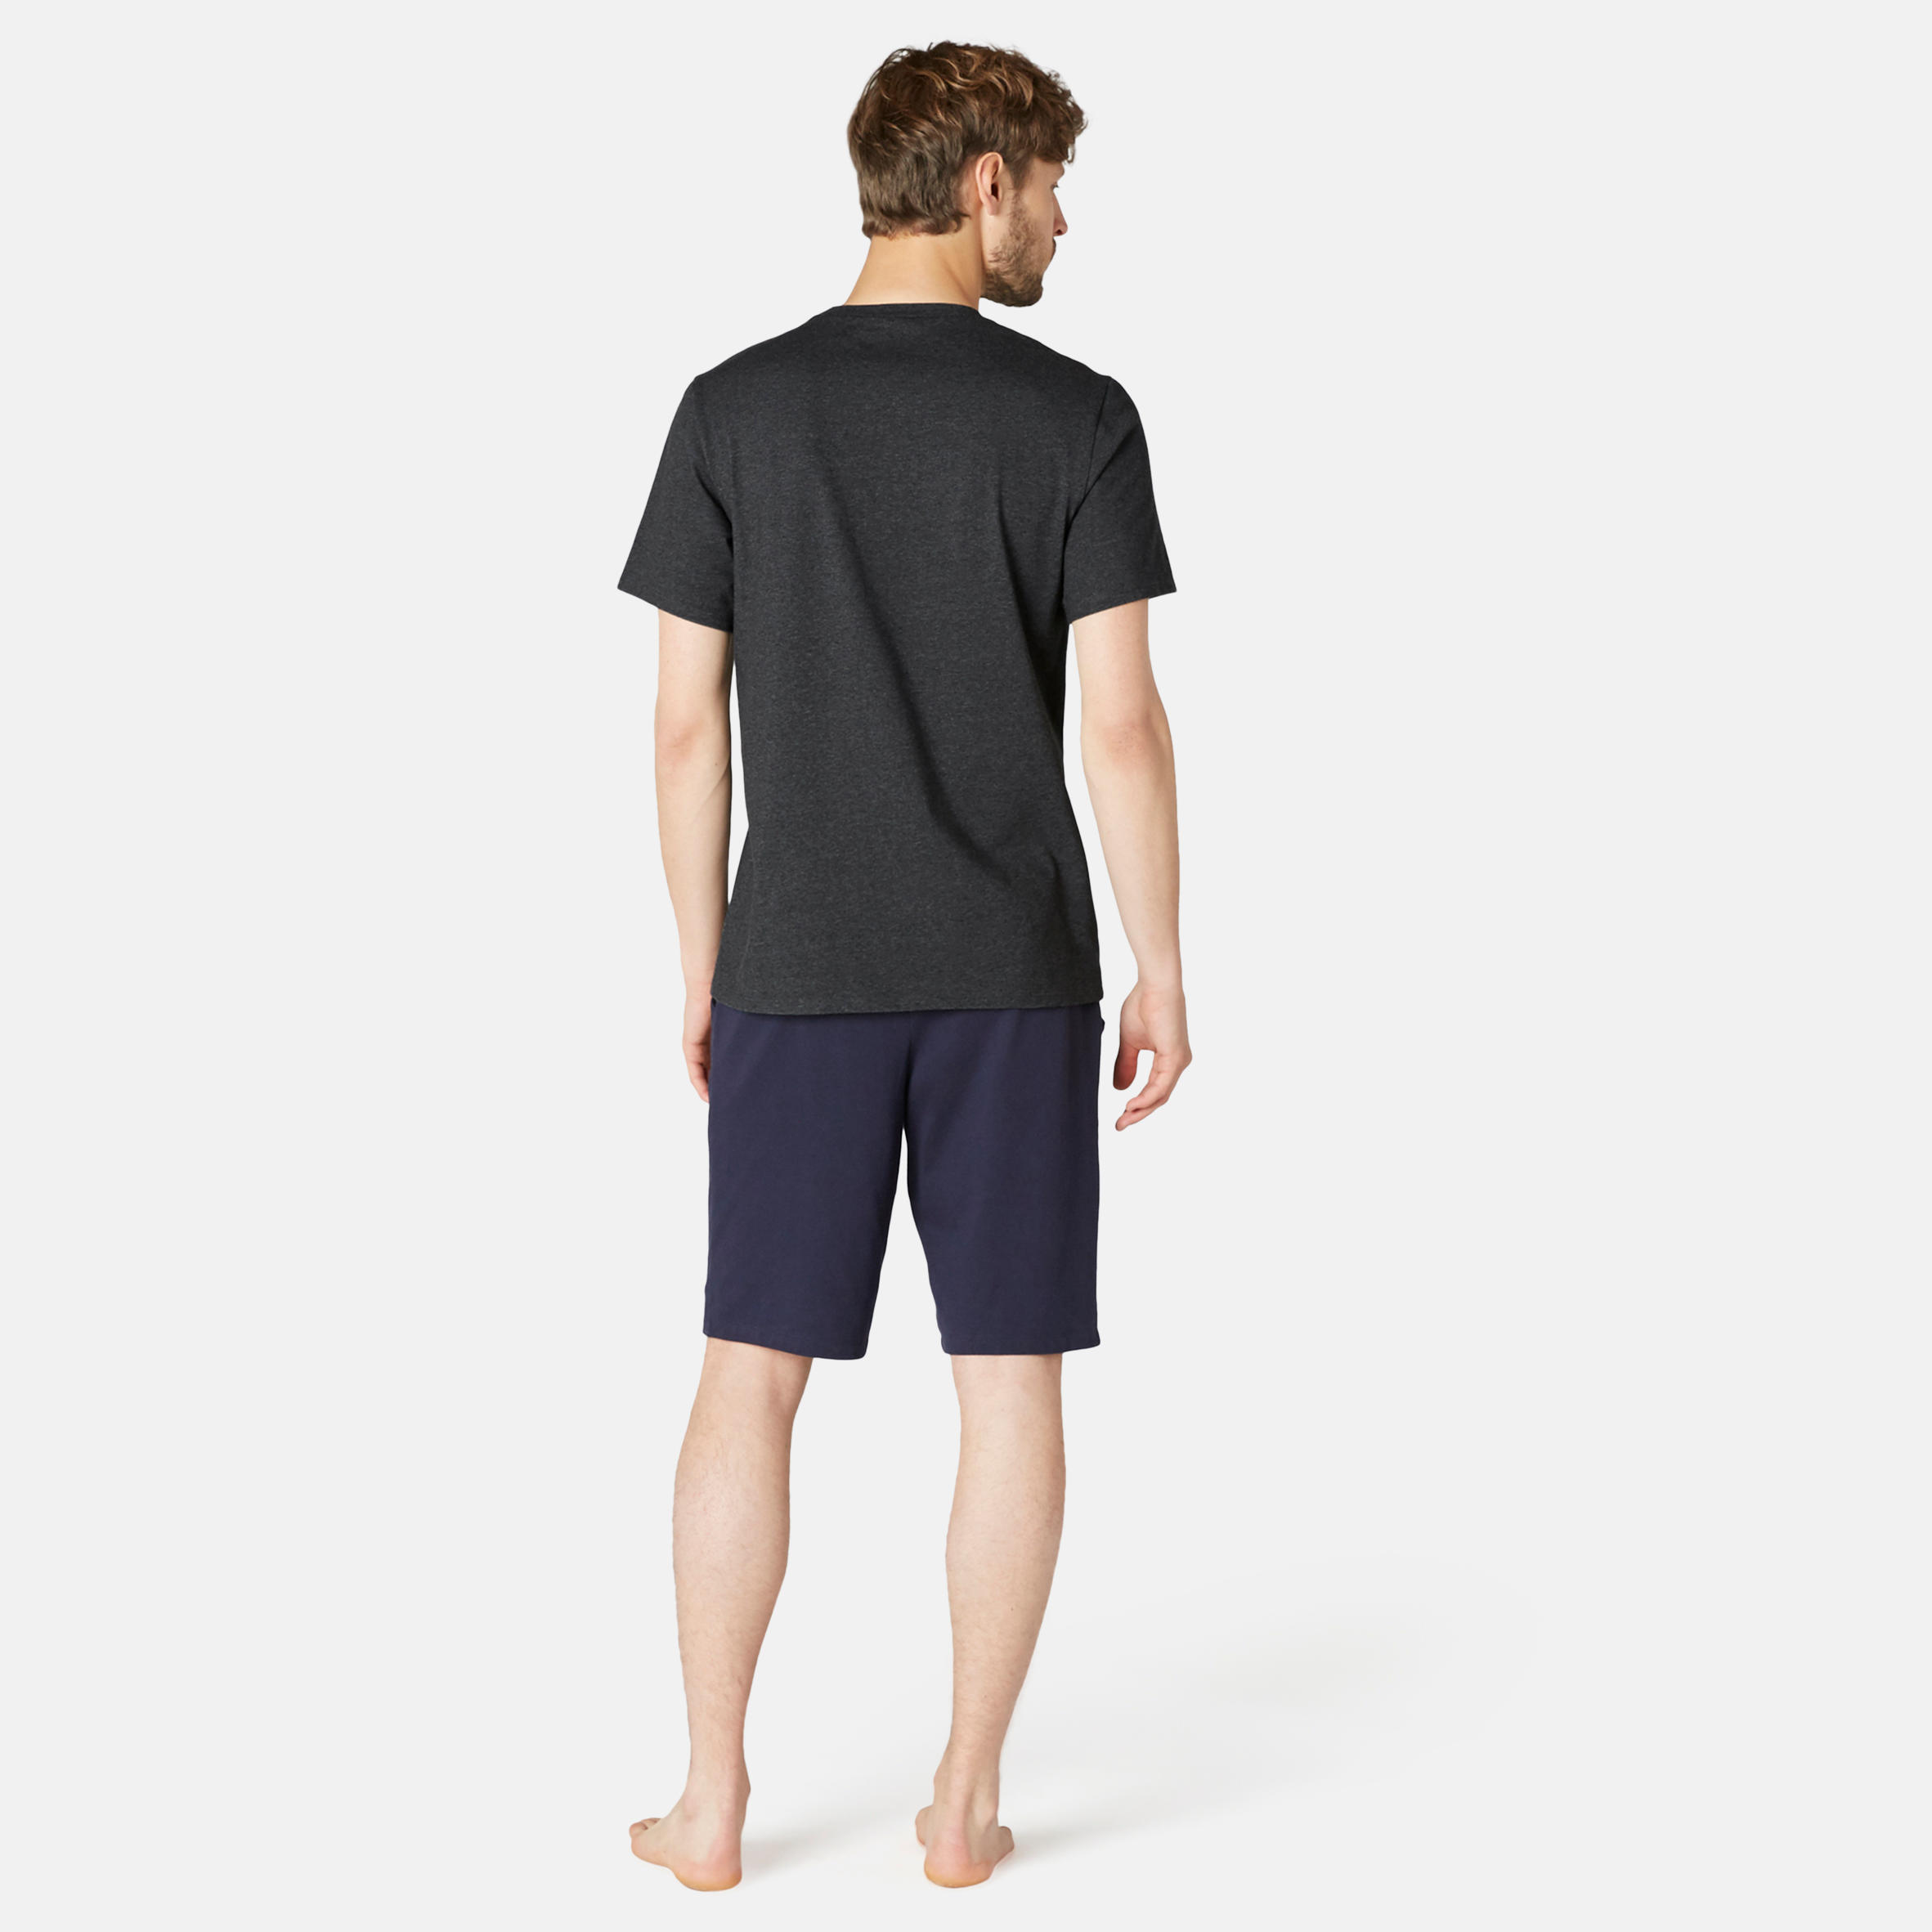 Men's Short-Sleeved Straight-Cut Crew Neck Cotton Fitness T-Shirt 500 - Grey 18/21